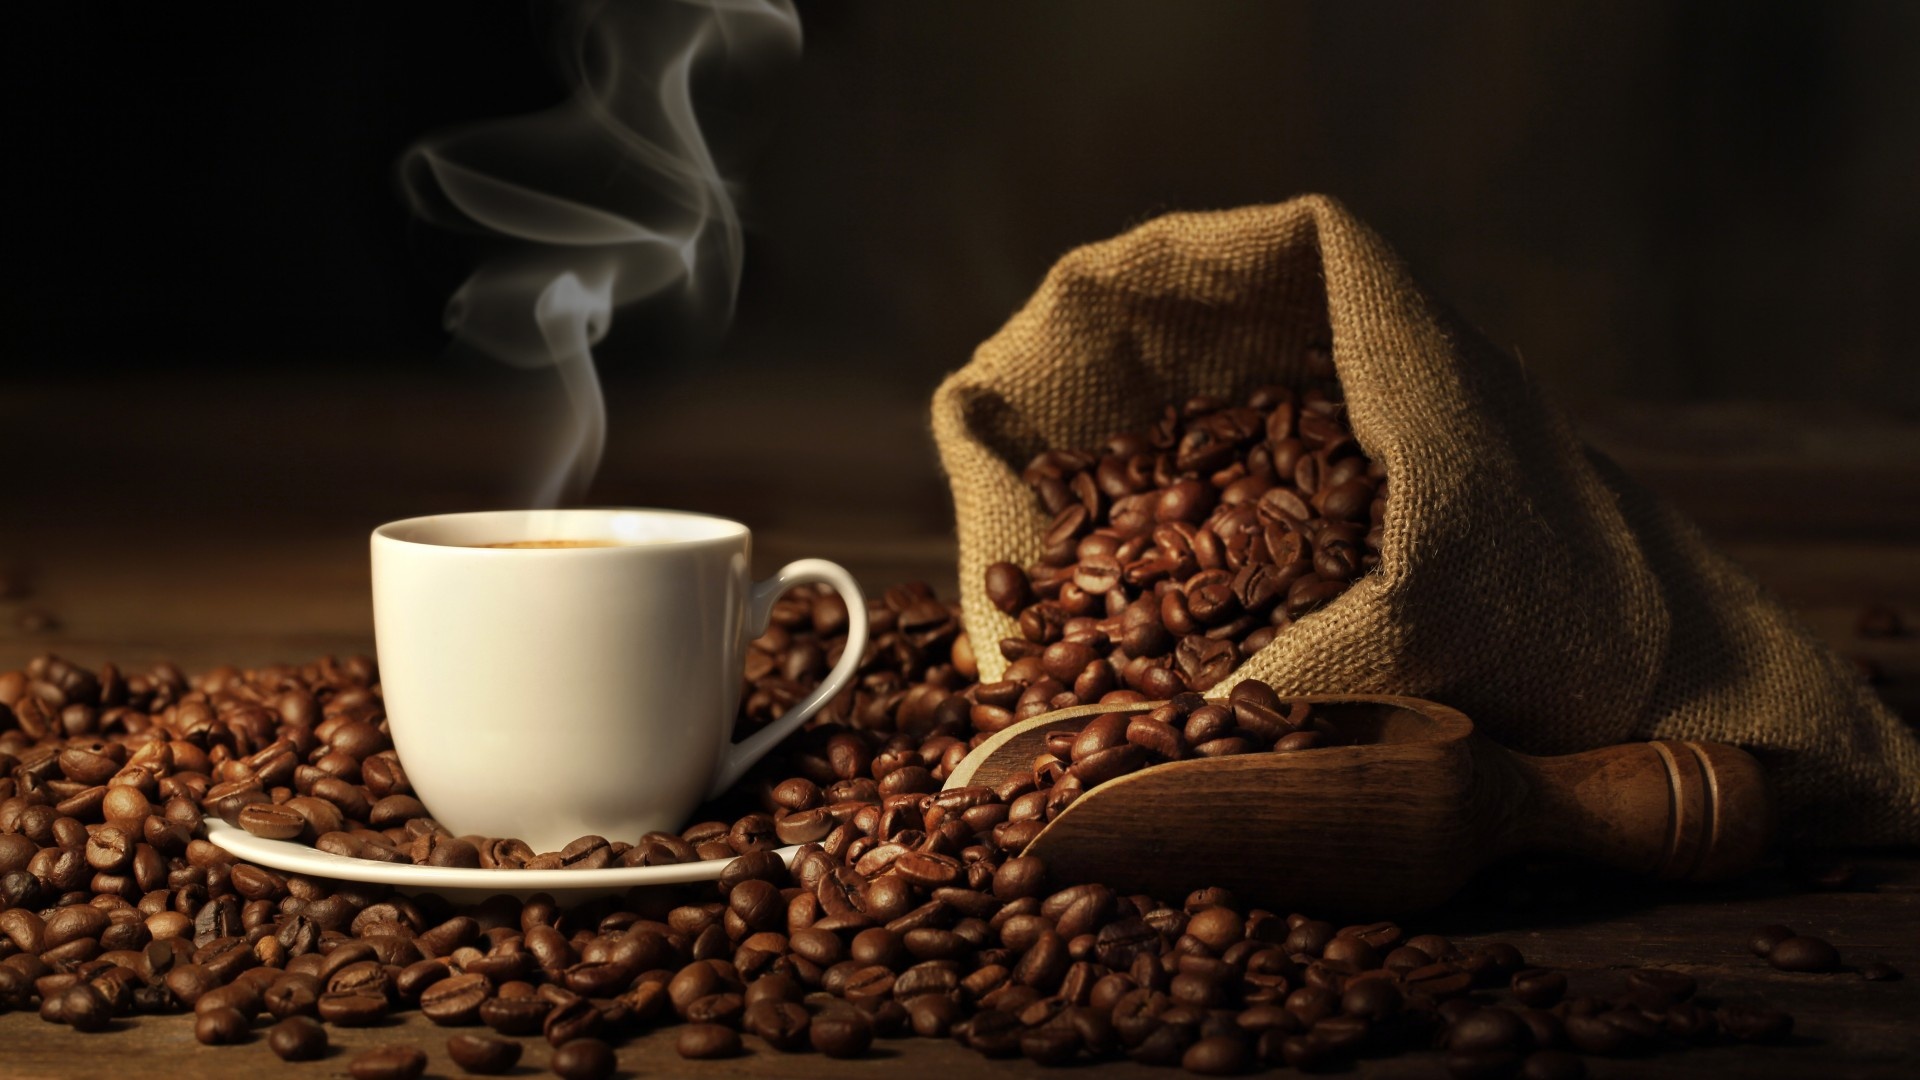 Coffee: Beverages containing caffeine, Vapor. 1920x1080 Full HD Wallpaper.